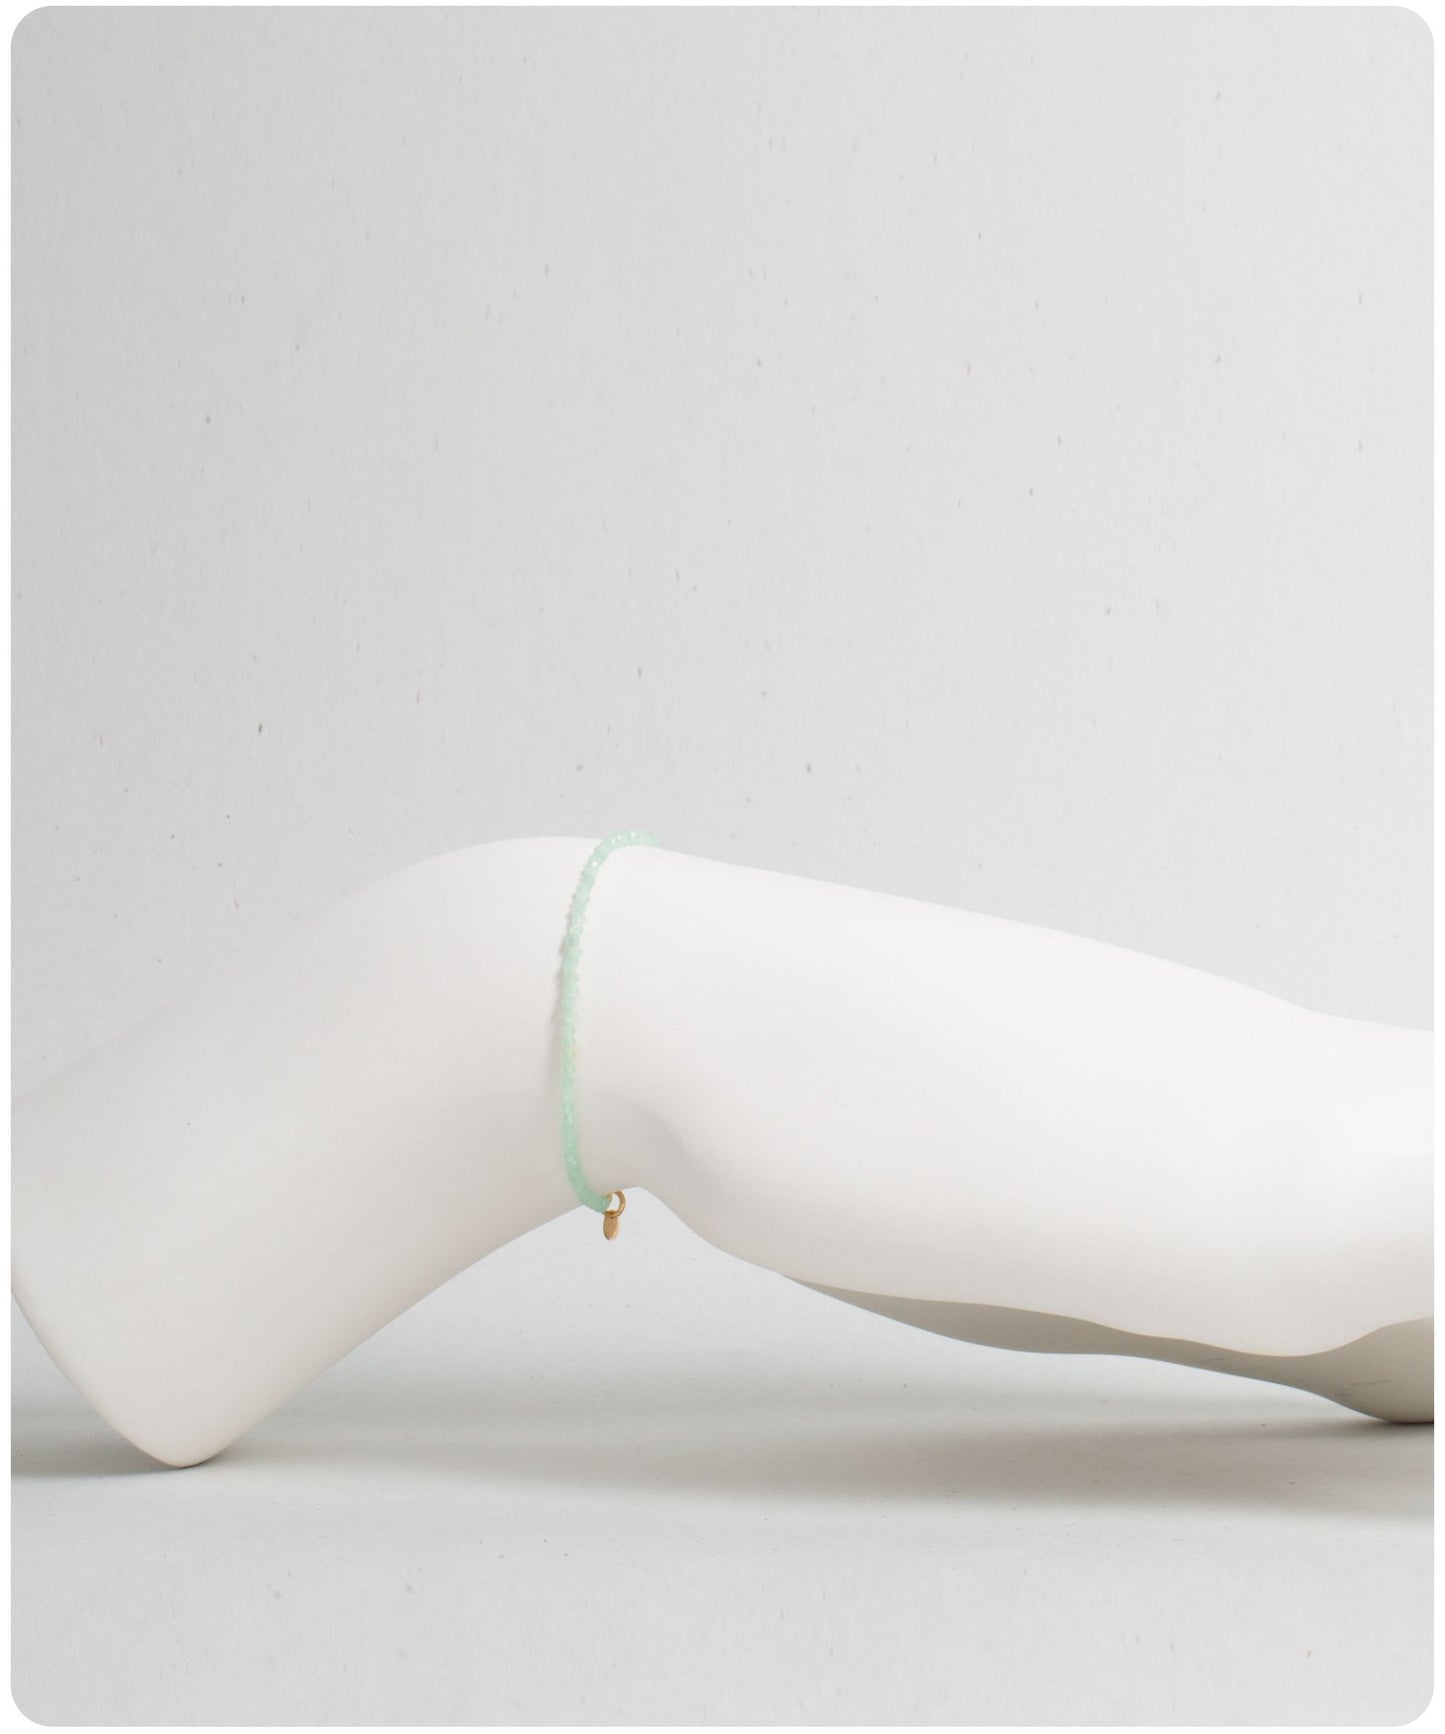 Jomalig Bracelet Set - Green Crystal Shades